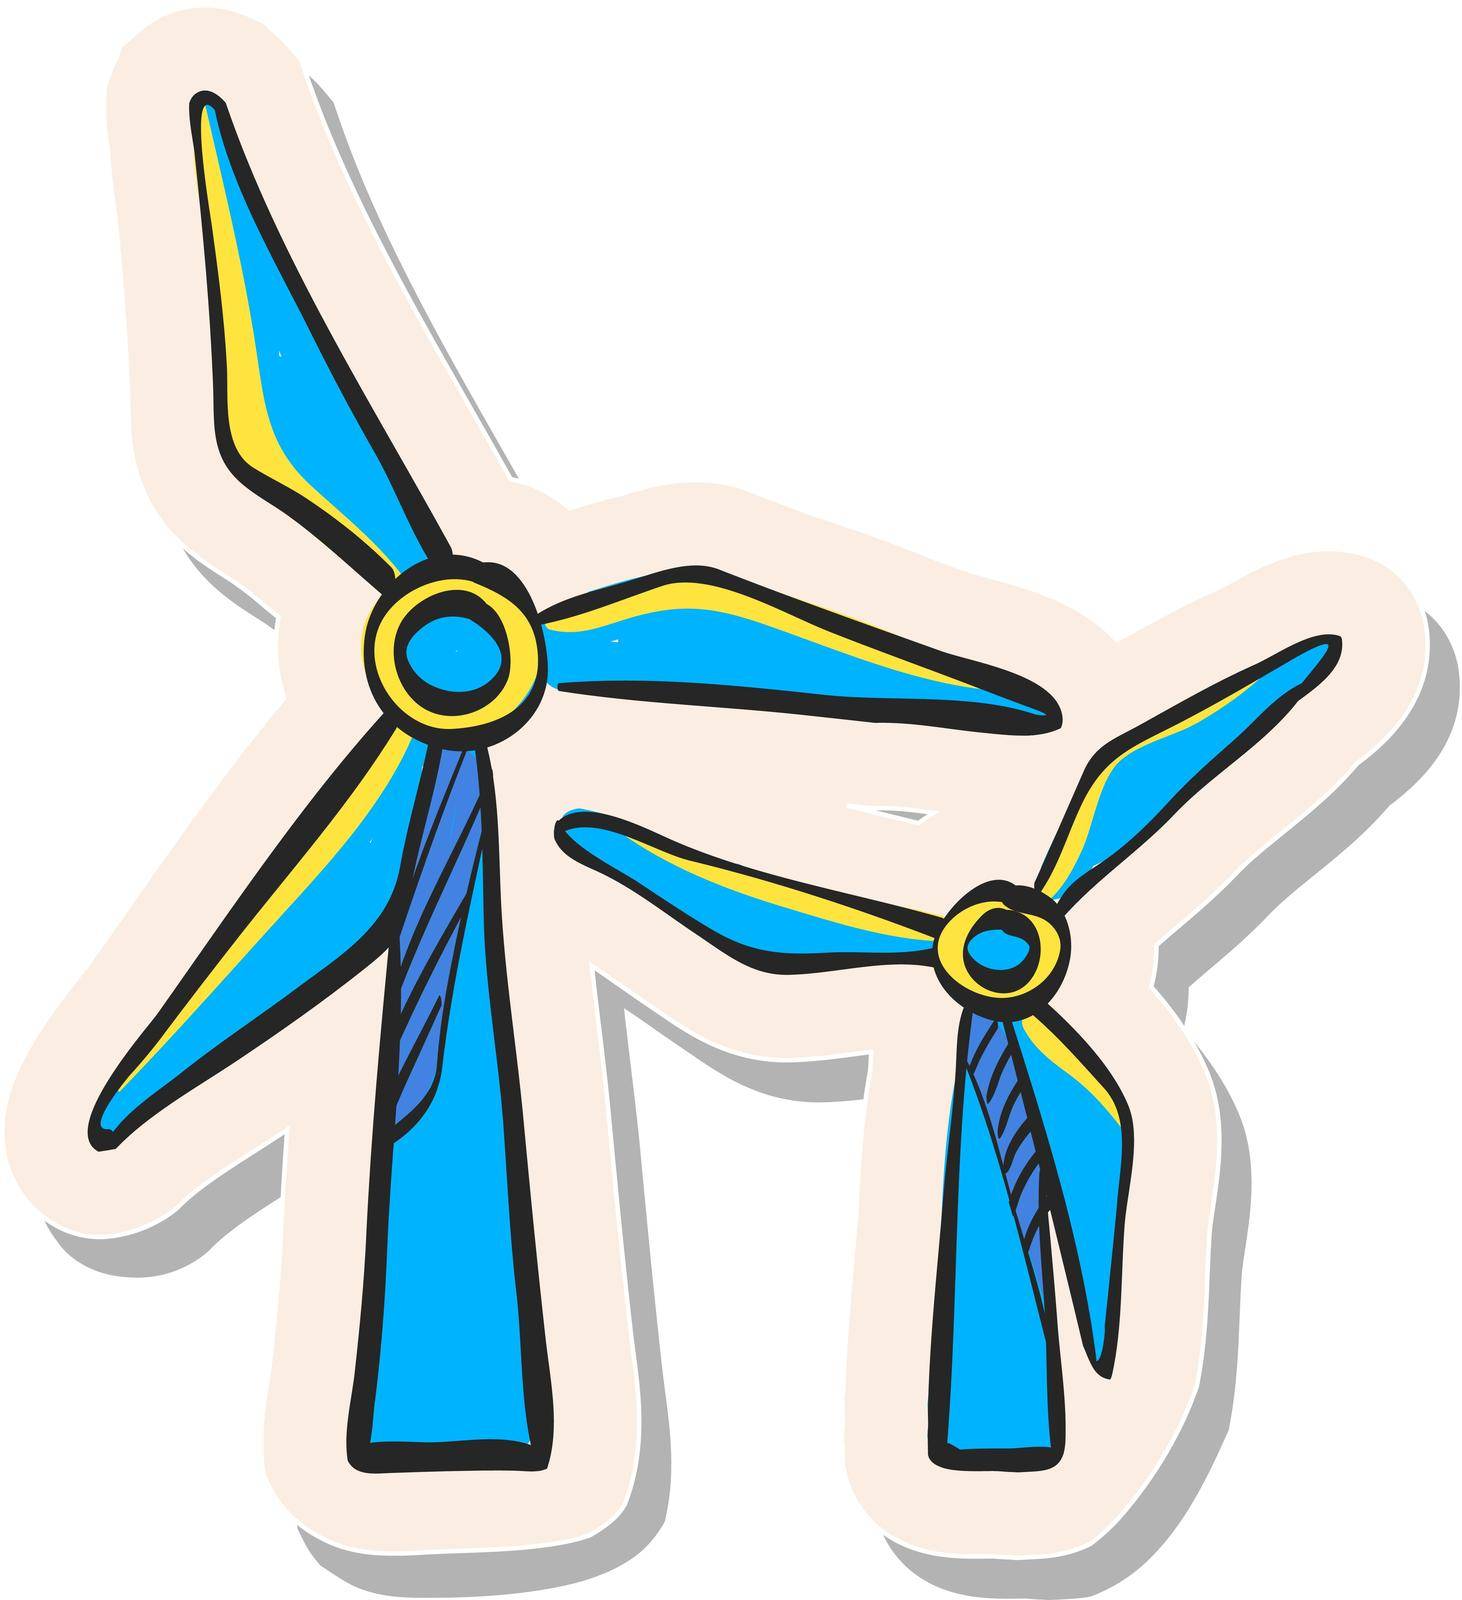 Hand drawn sticker style icon Wind turbine by puruan